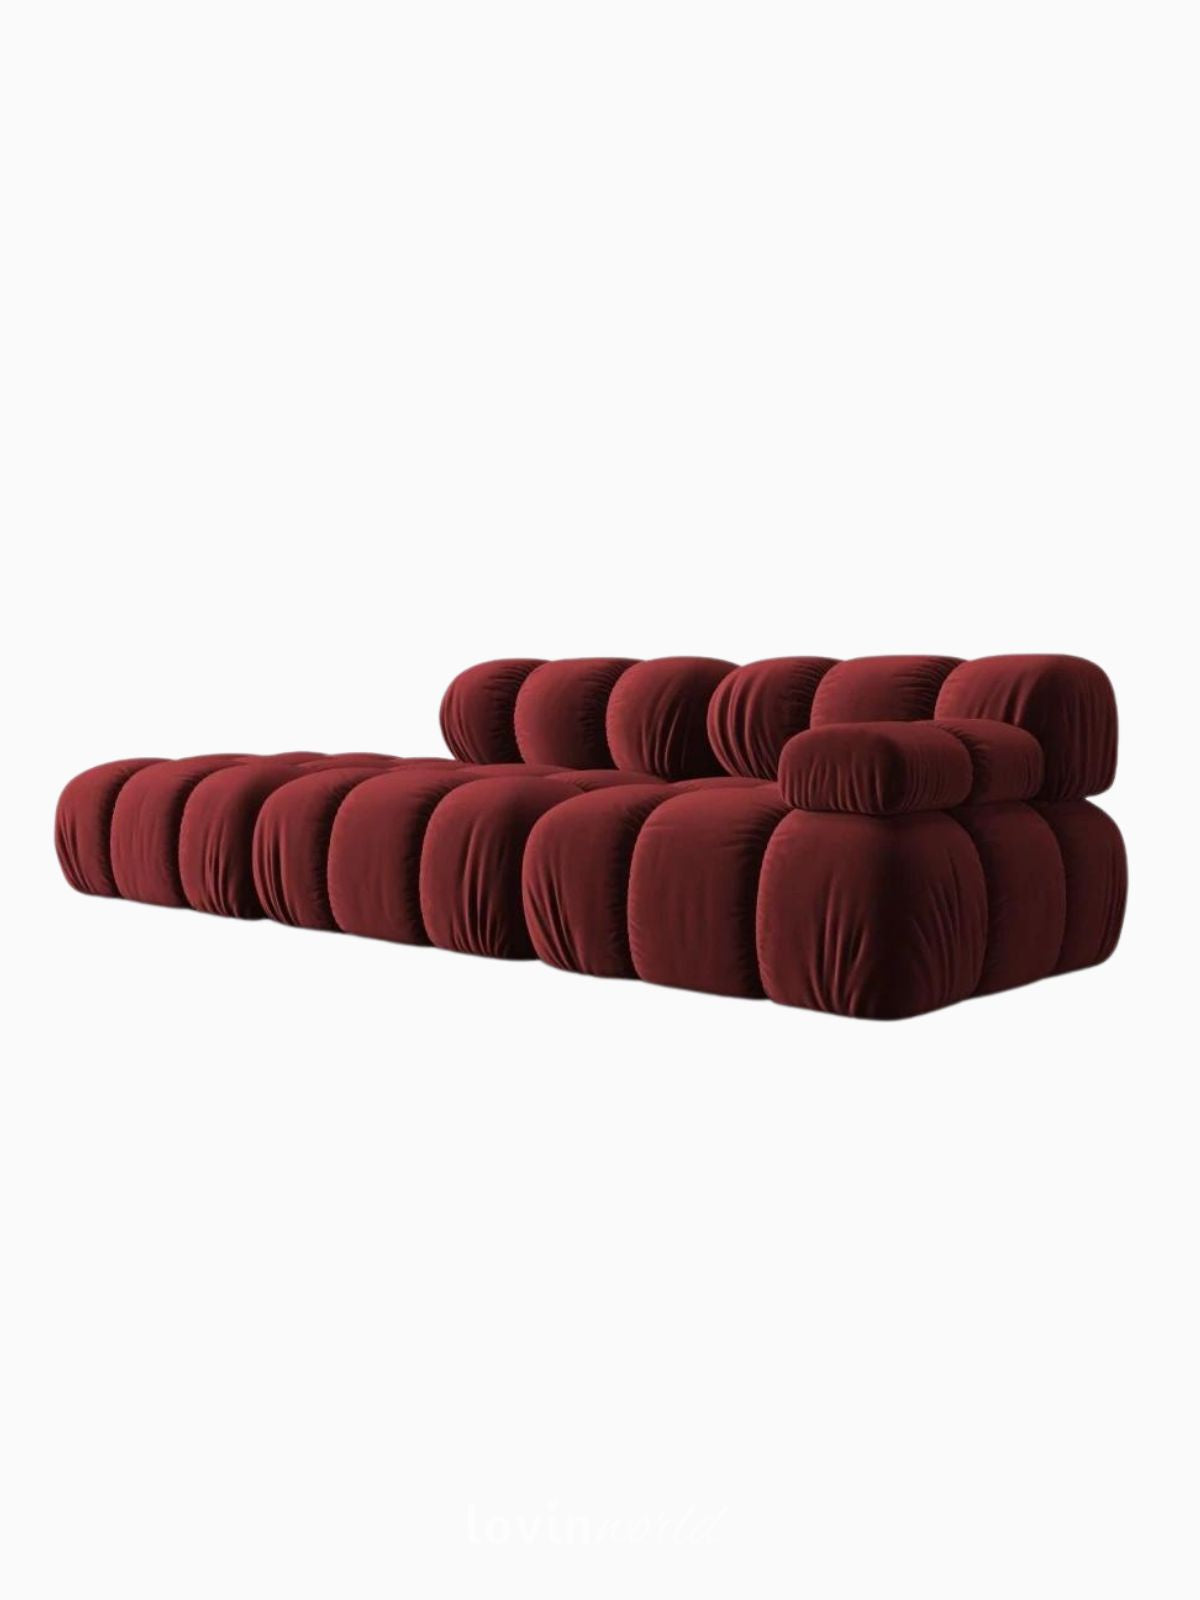 Divano modulare 4 sedute Bellis in velluto, colore rosso-3